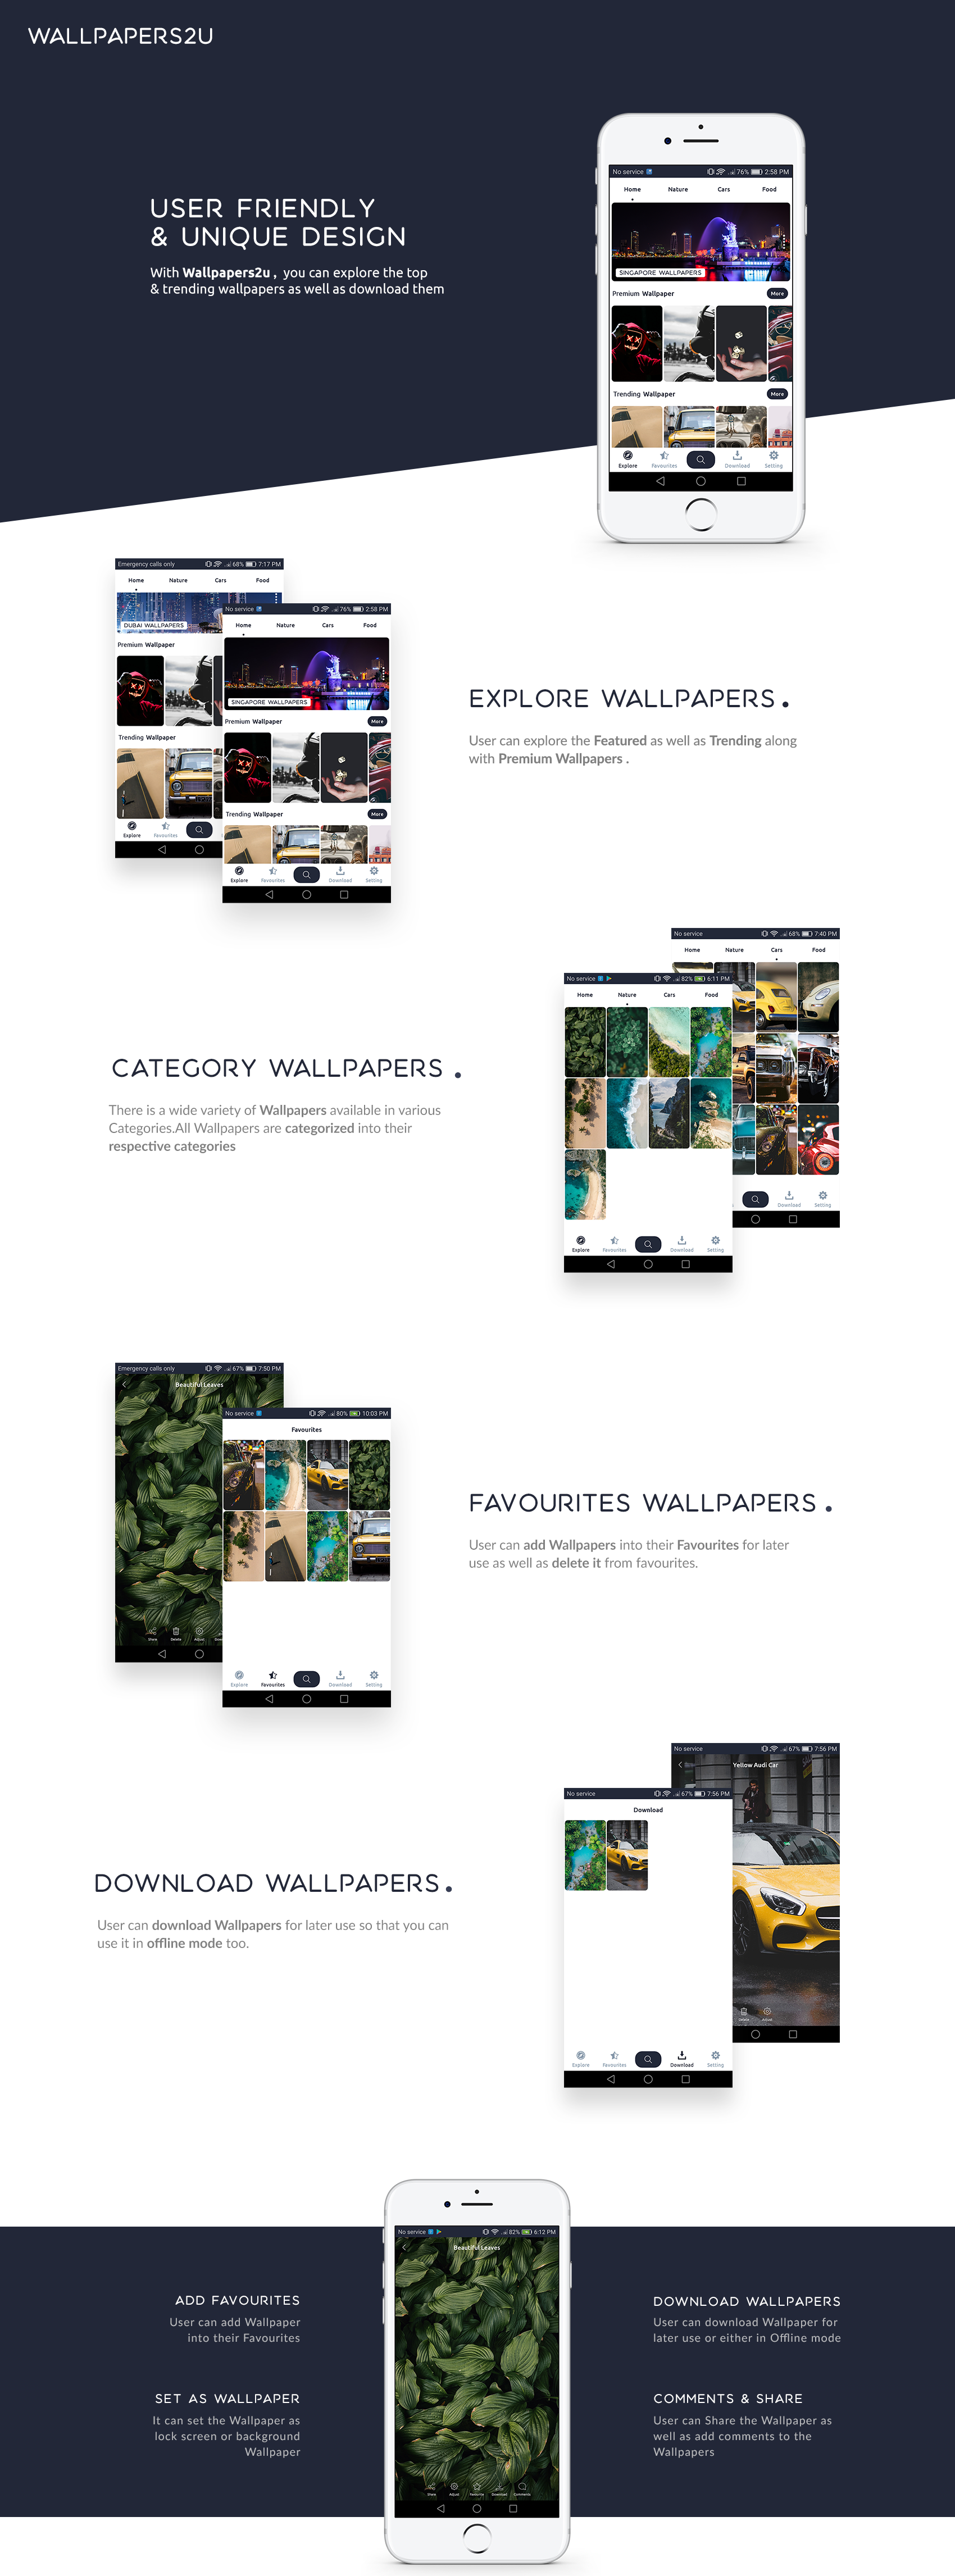 Wallpapers2u - Complete Wallpaper app with Admin Panel - 1